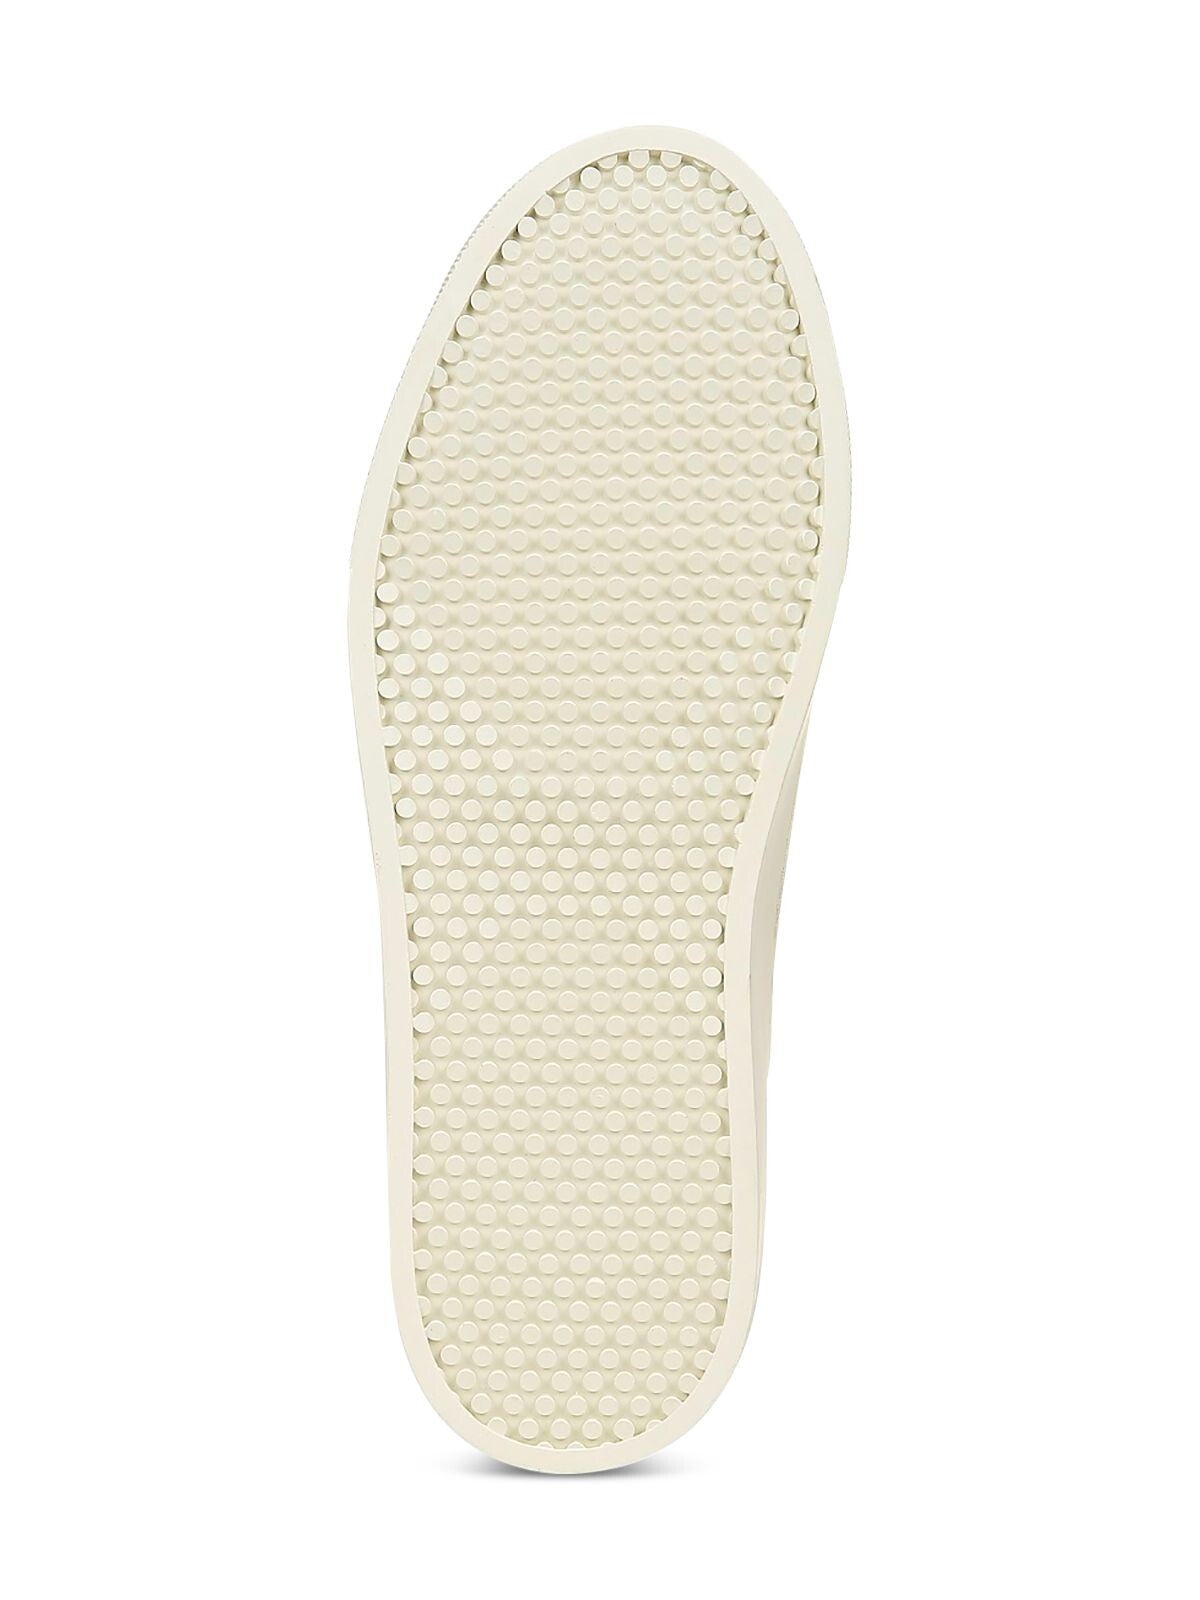 VIA SPIGA Womens White Comfort Sybil Cap Toe Platform Lace-Up Athletic Sneakers Shoes M